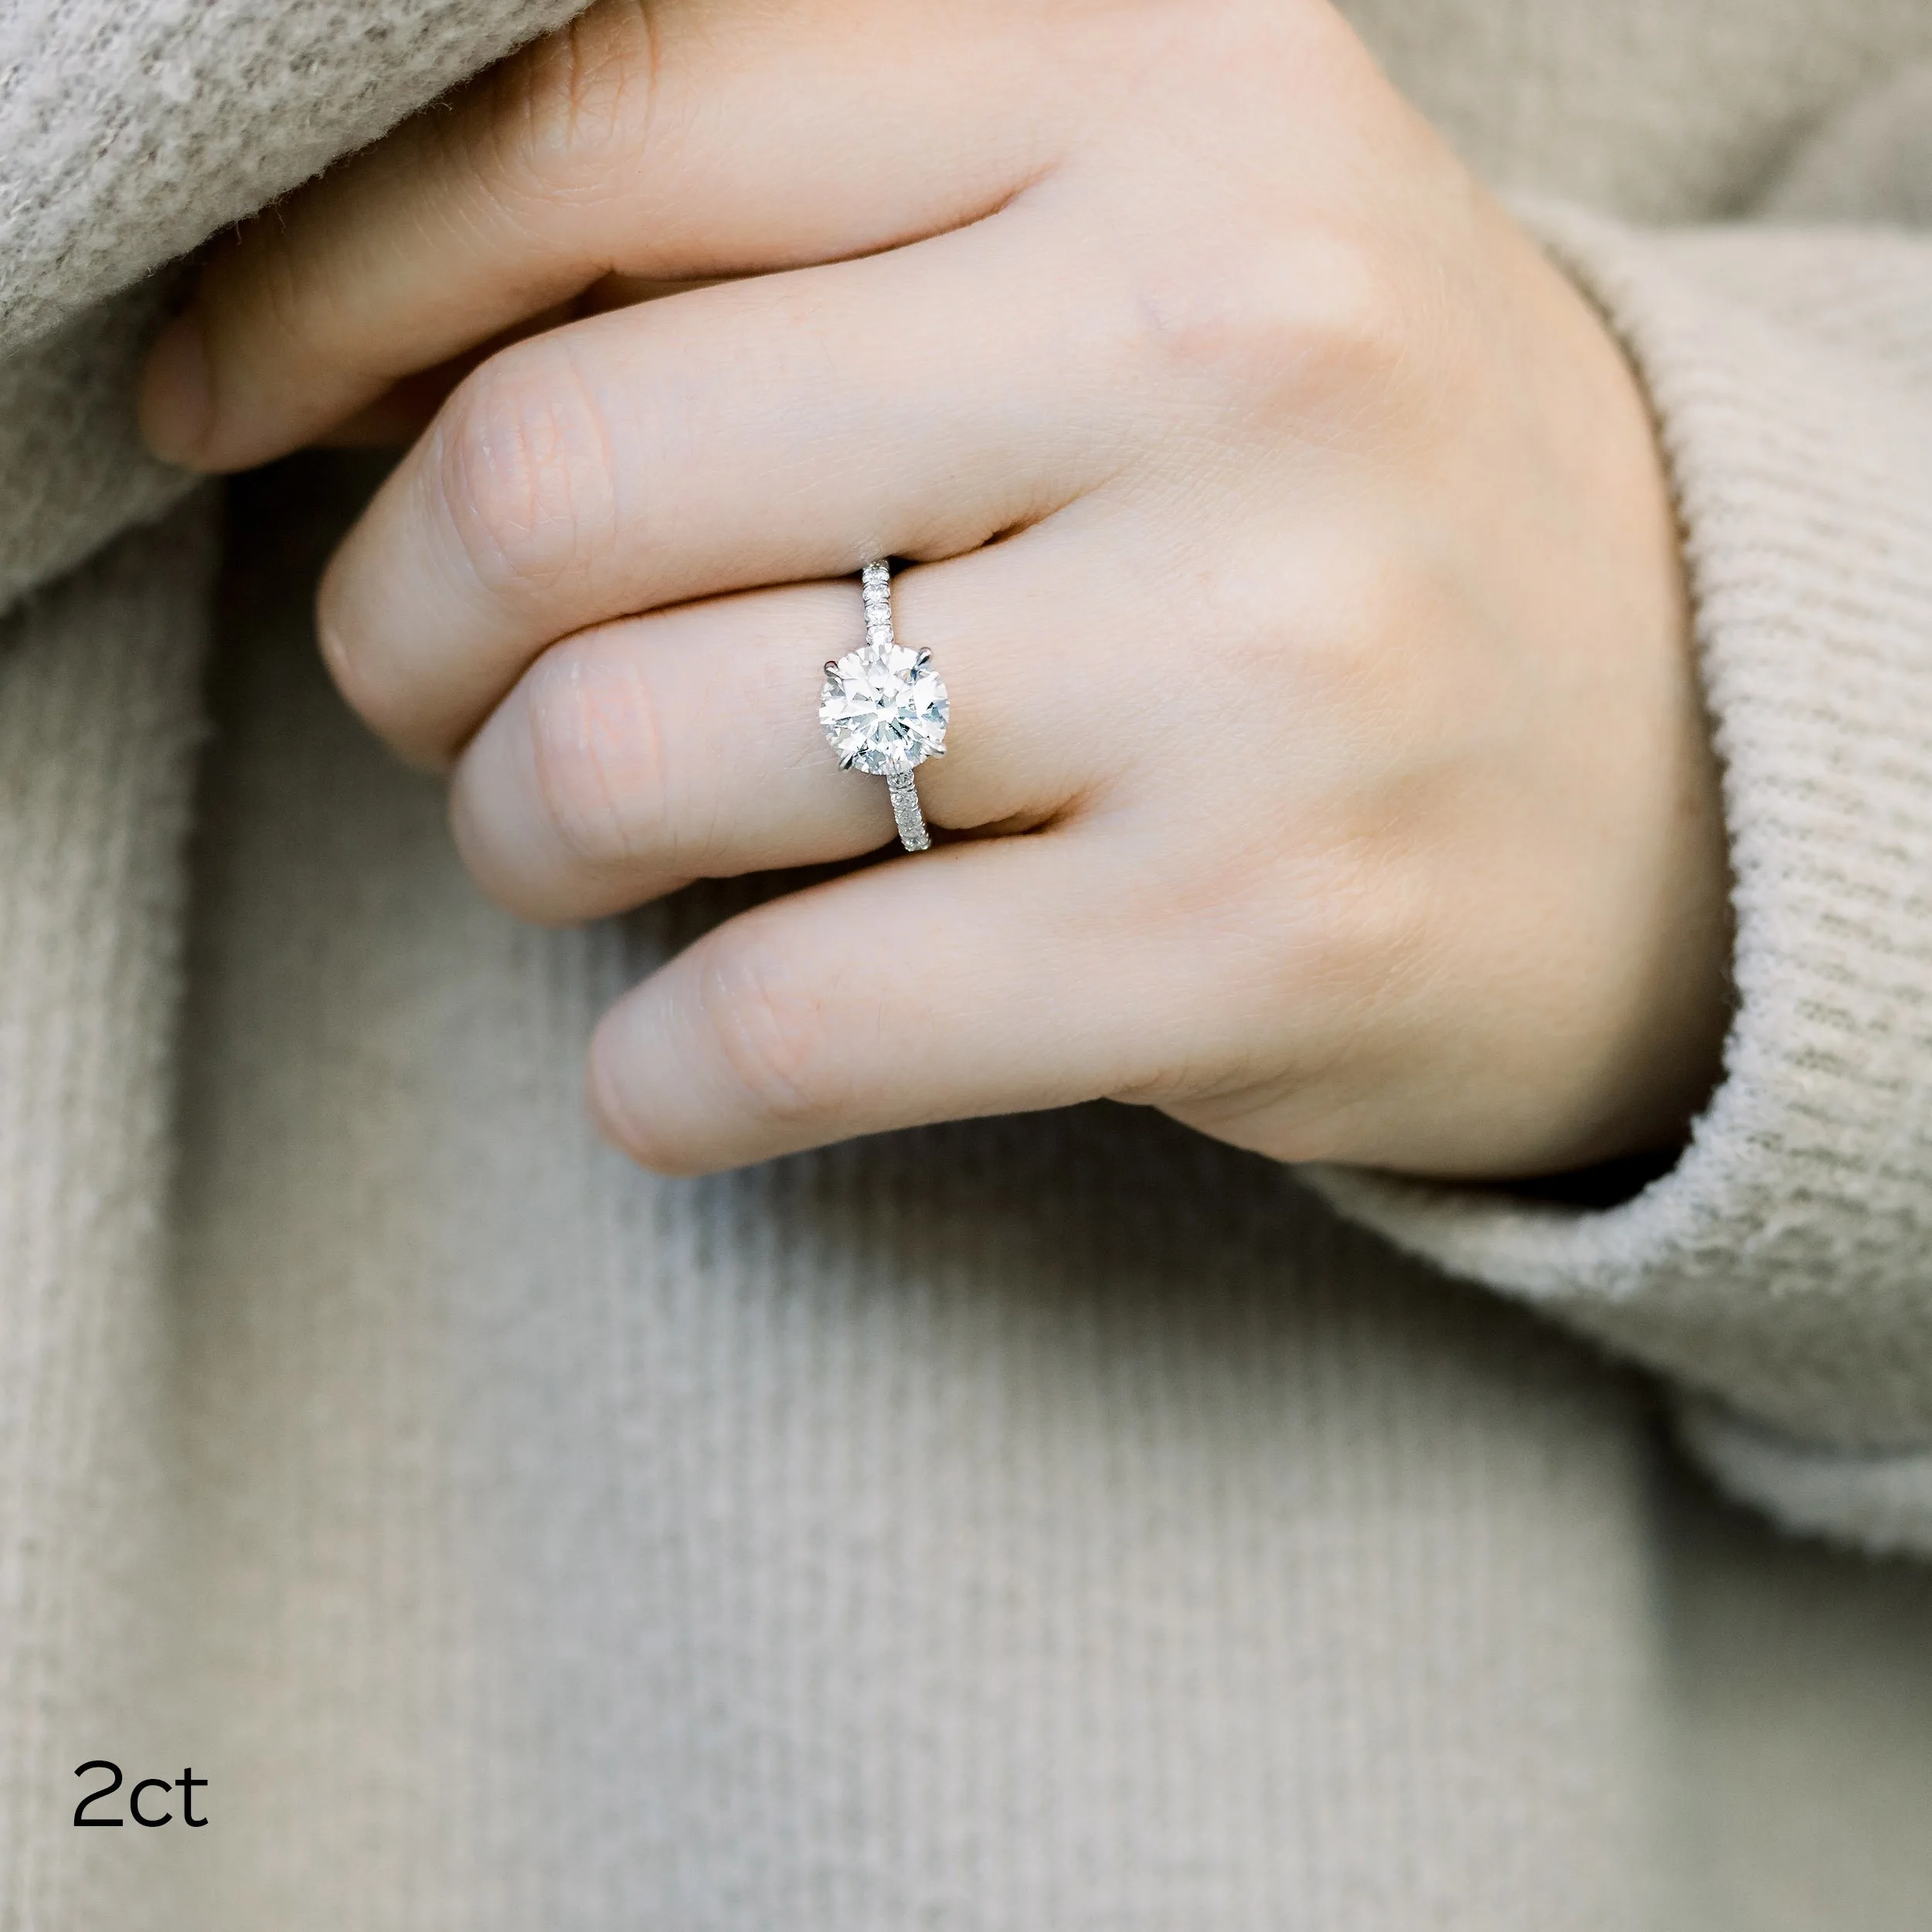 2ct round lab diamond in petite pave engagement ring